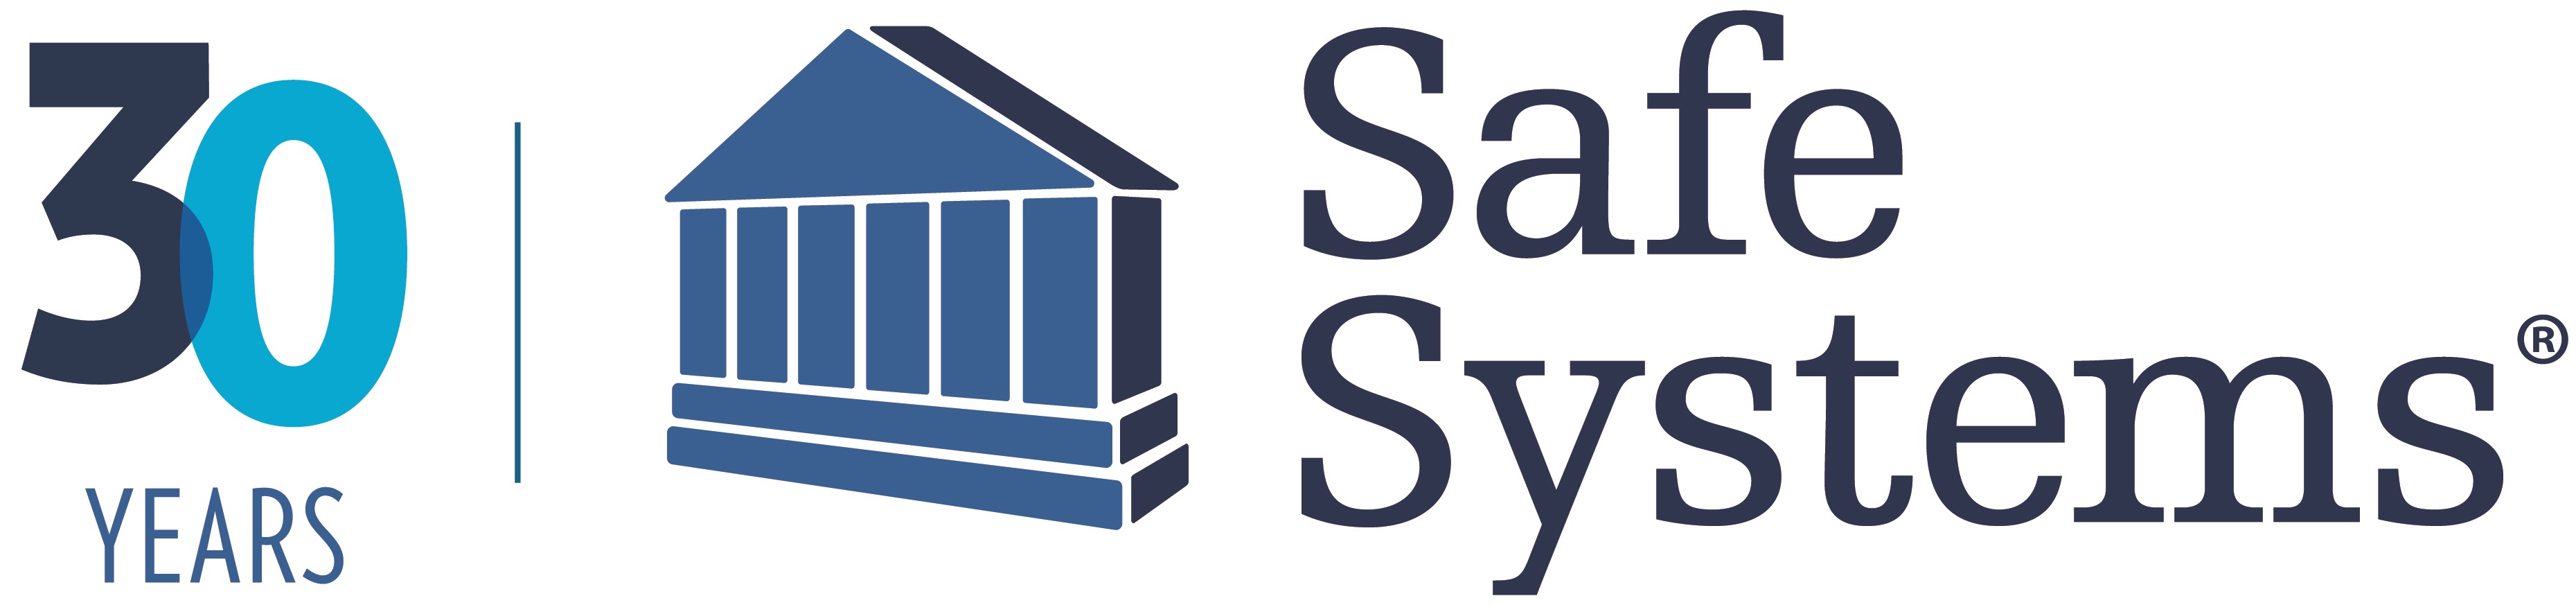 Safe Systems, Inc.